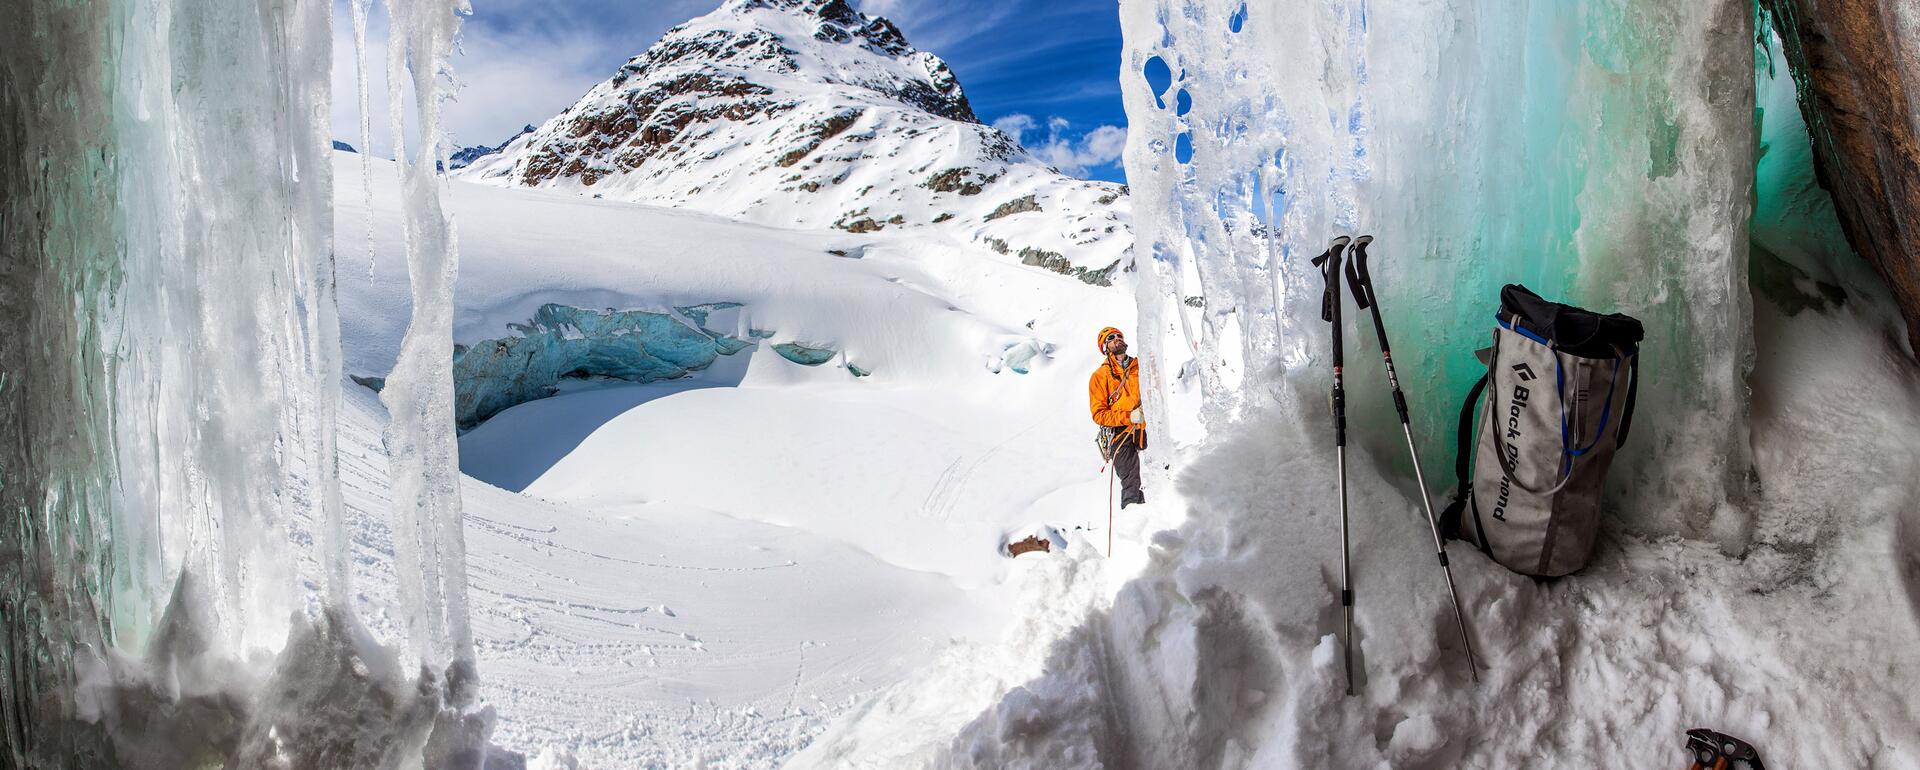 Eisklettern Pitztaler Gletscher | © TVB Pitztal/ Chris Walch